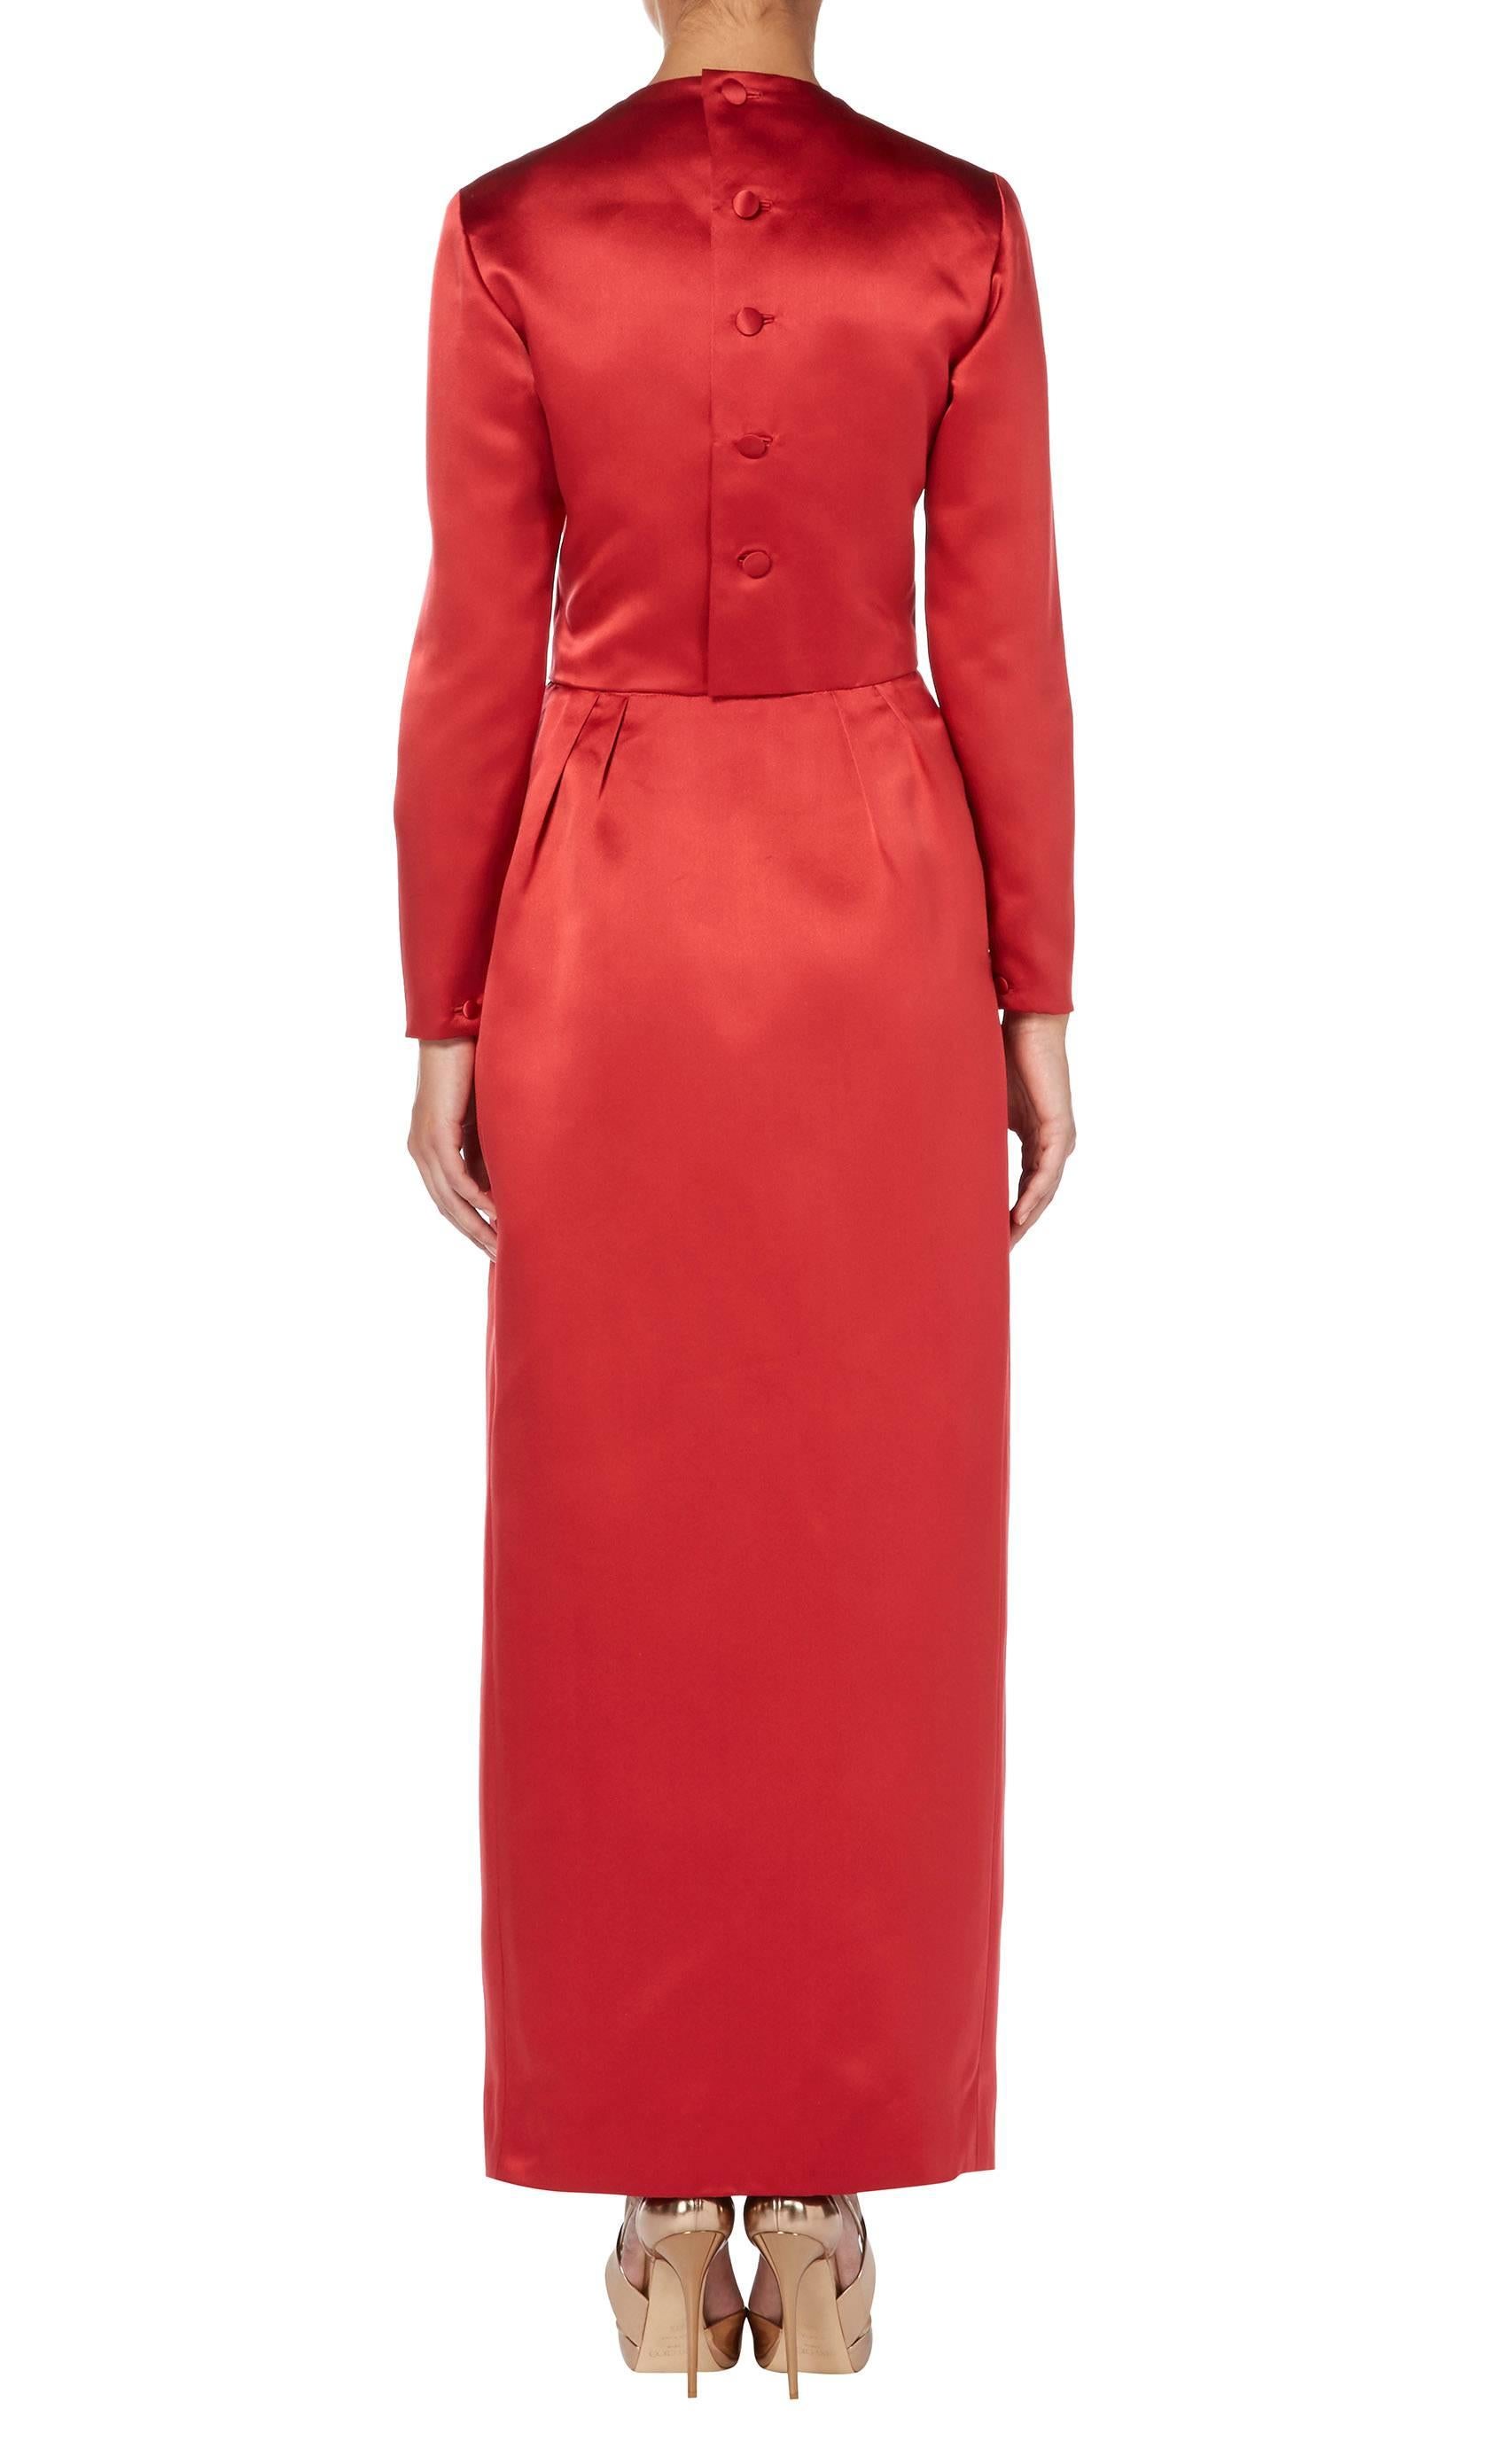 Women's Dior haute couture red dress, Autumn/Winter 1979